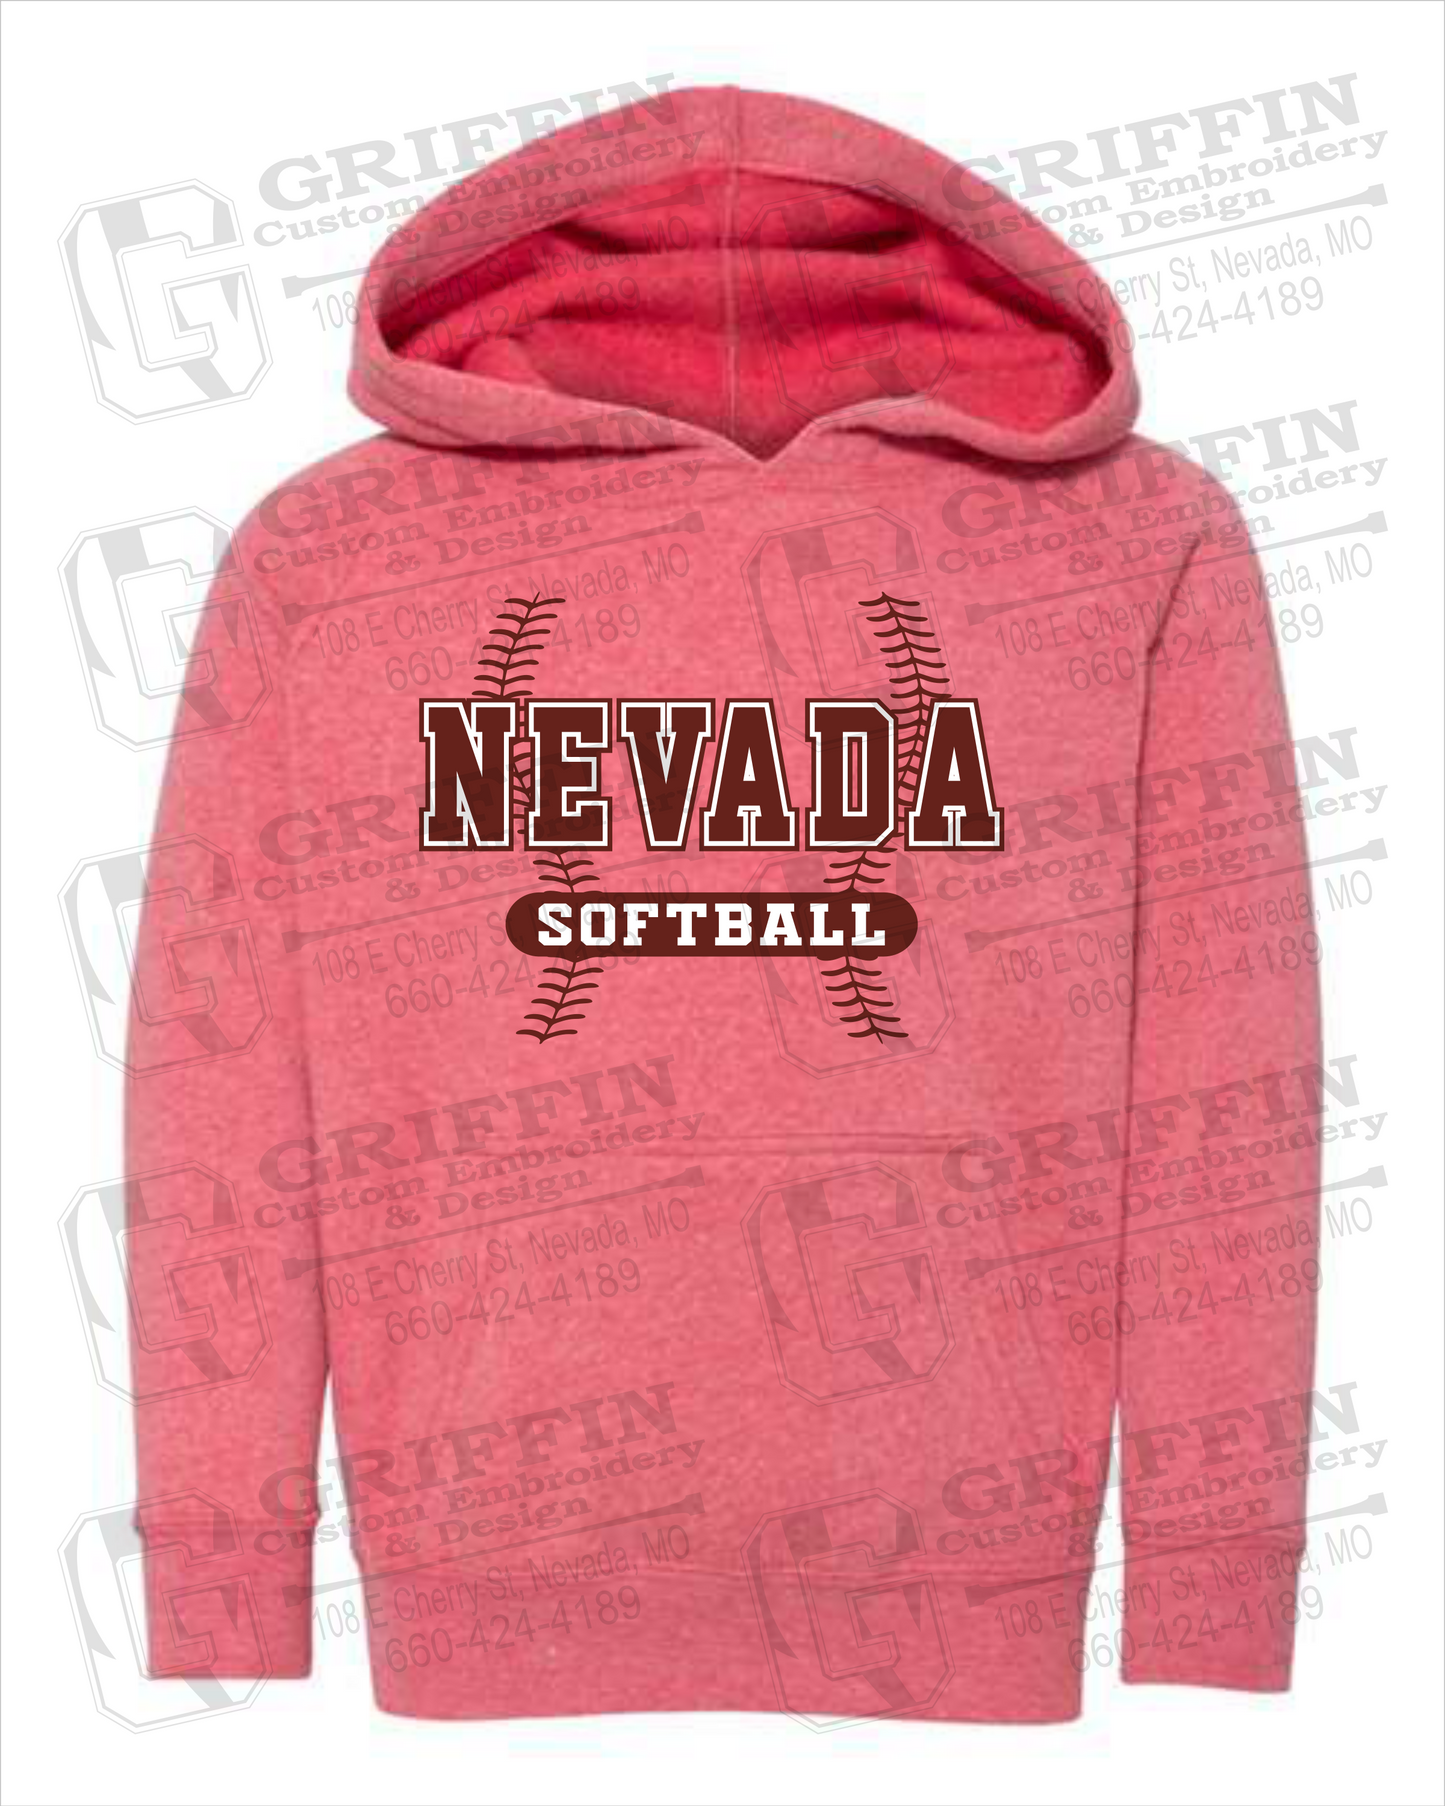 Nevada Tigers 24-E Toddler Hoodie - Softball